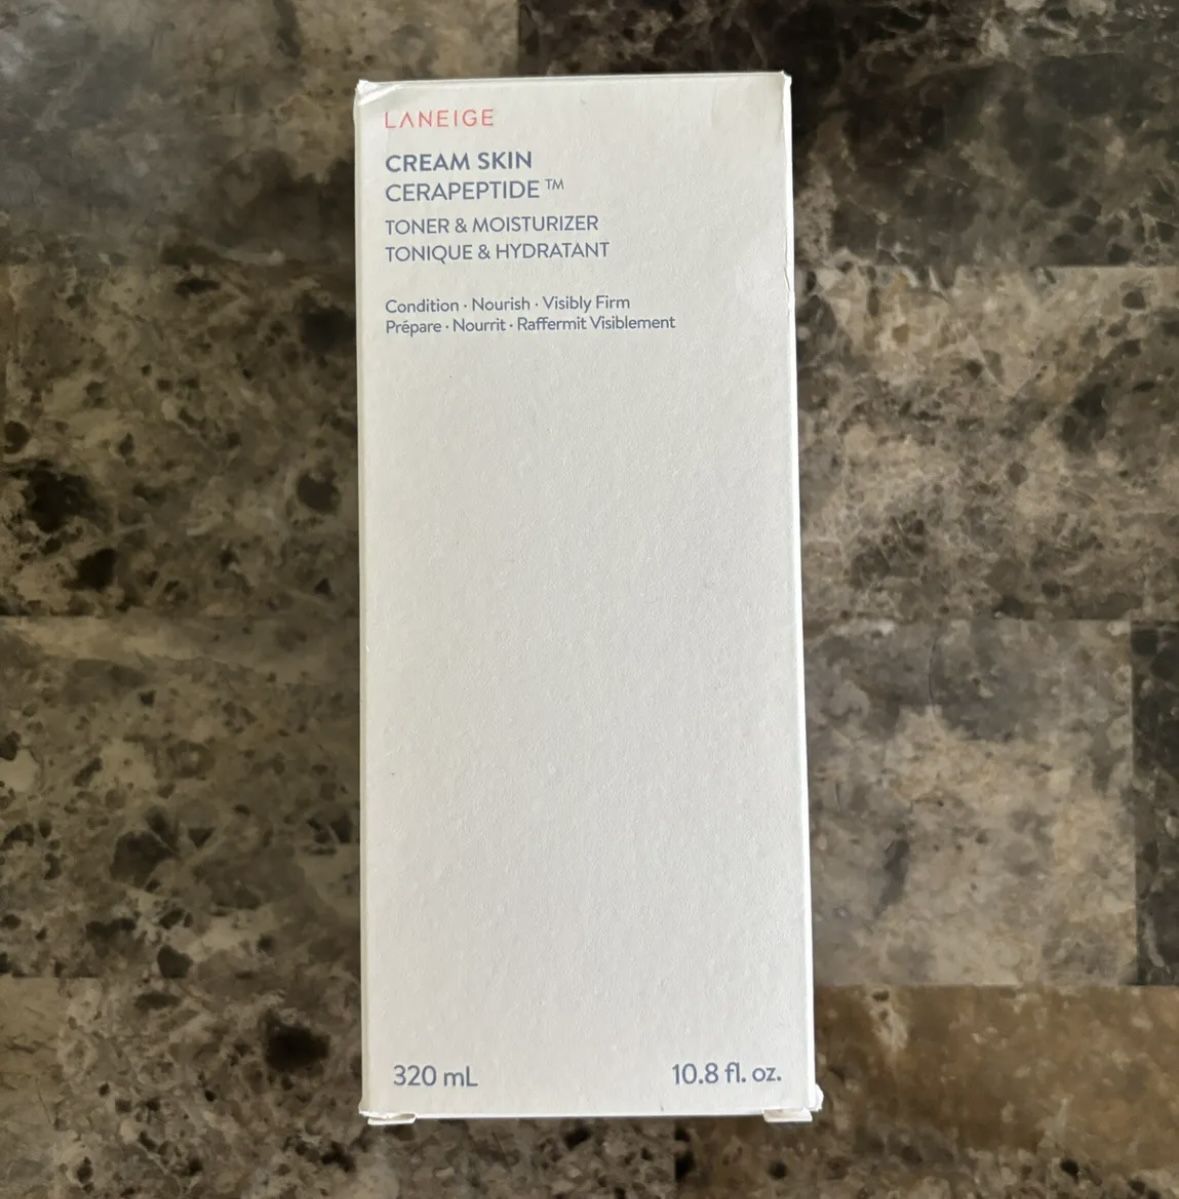 Laneige Cream Skin Cerapeptide Toner & Moisturizer 10.8 fl oz Pump New Skincare